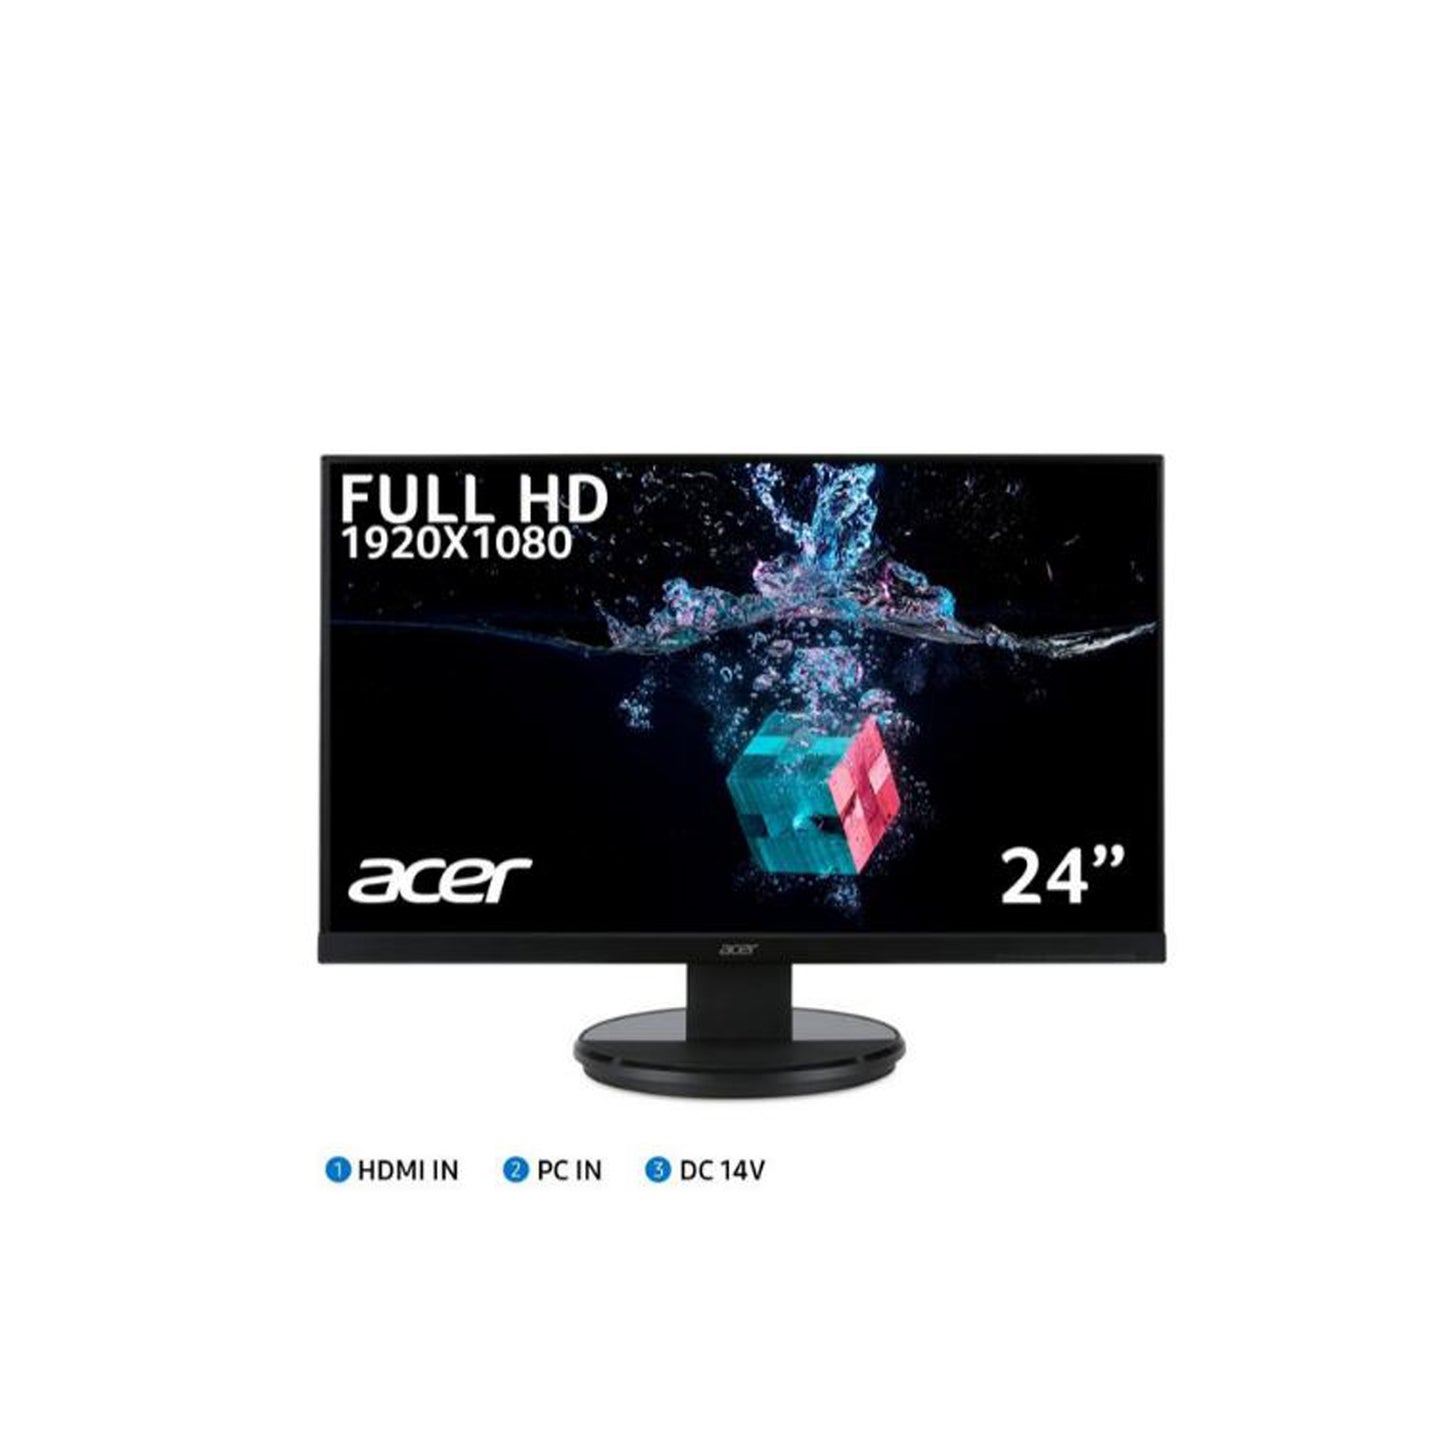 ACER KB242HYL Full HD 23.8" LED Monitor - Black